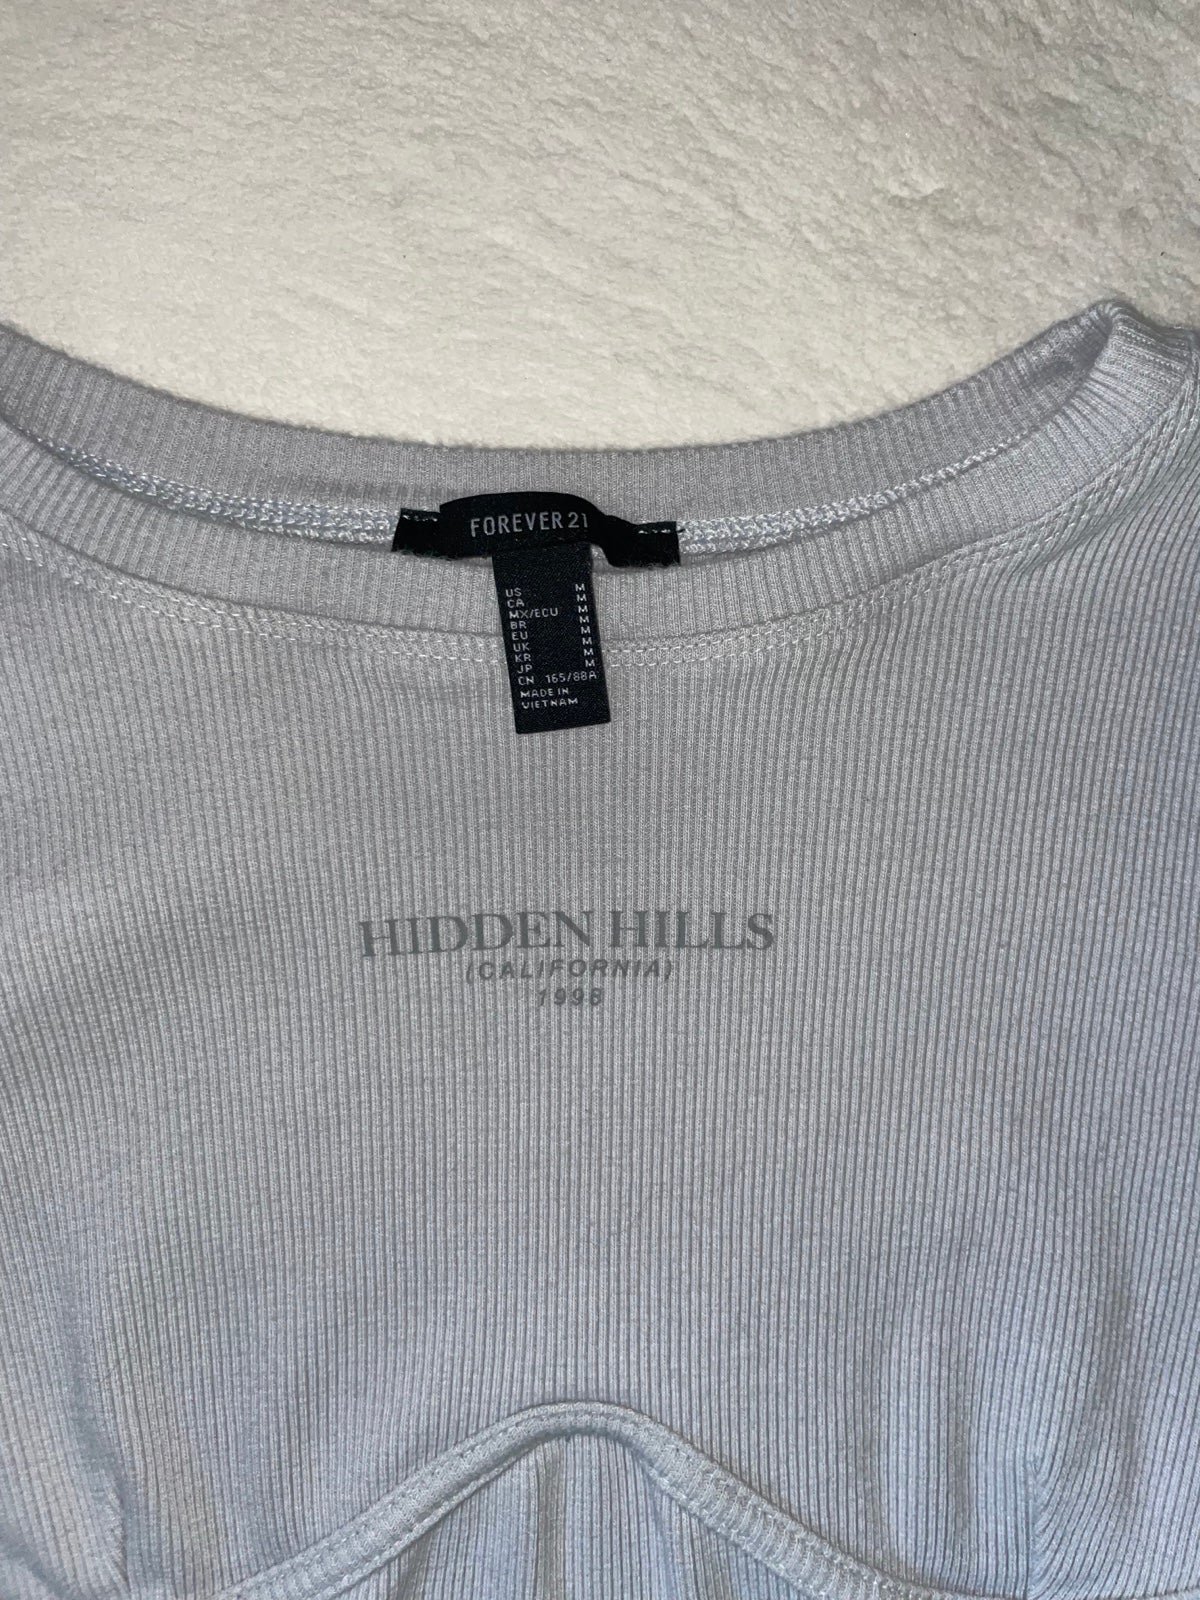 Exclusive Light blue ‘hidden hills’ long sleeve LGNk7VVi0 just buy it